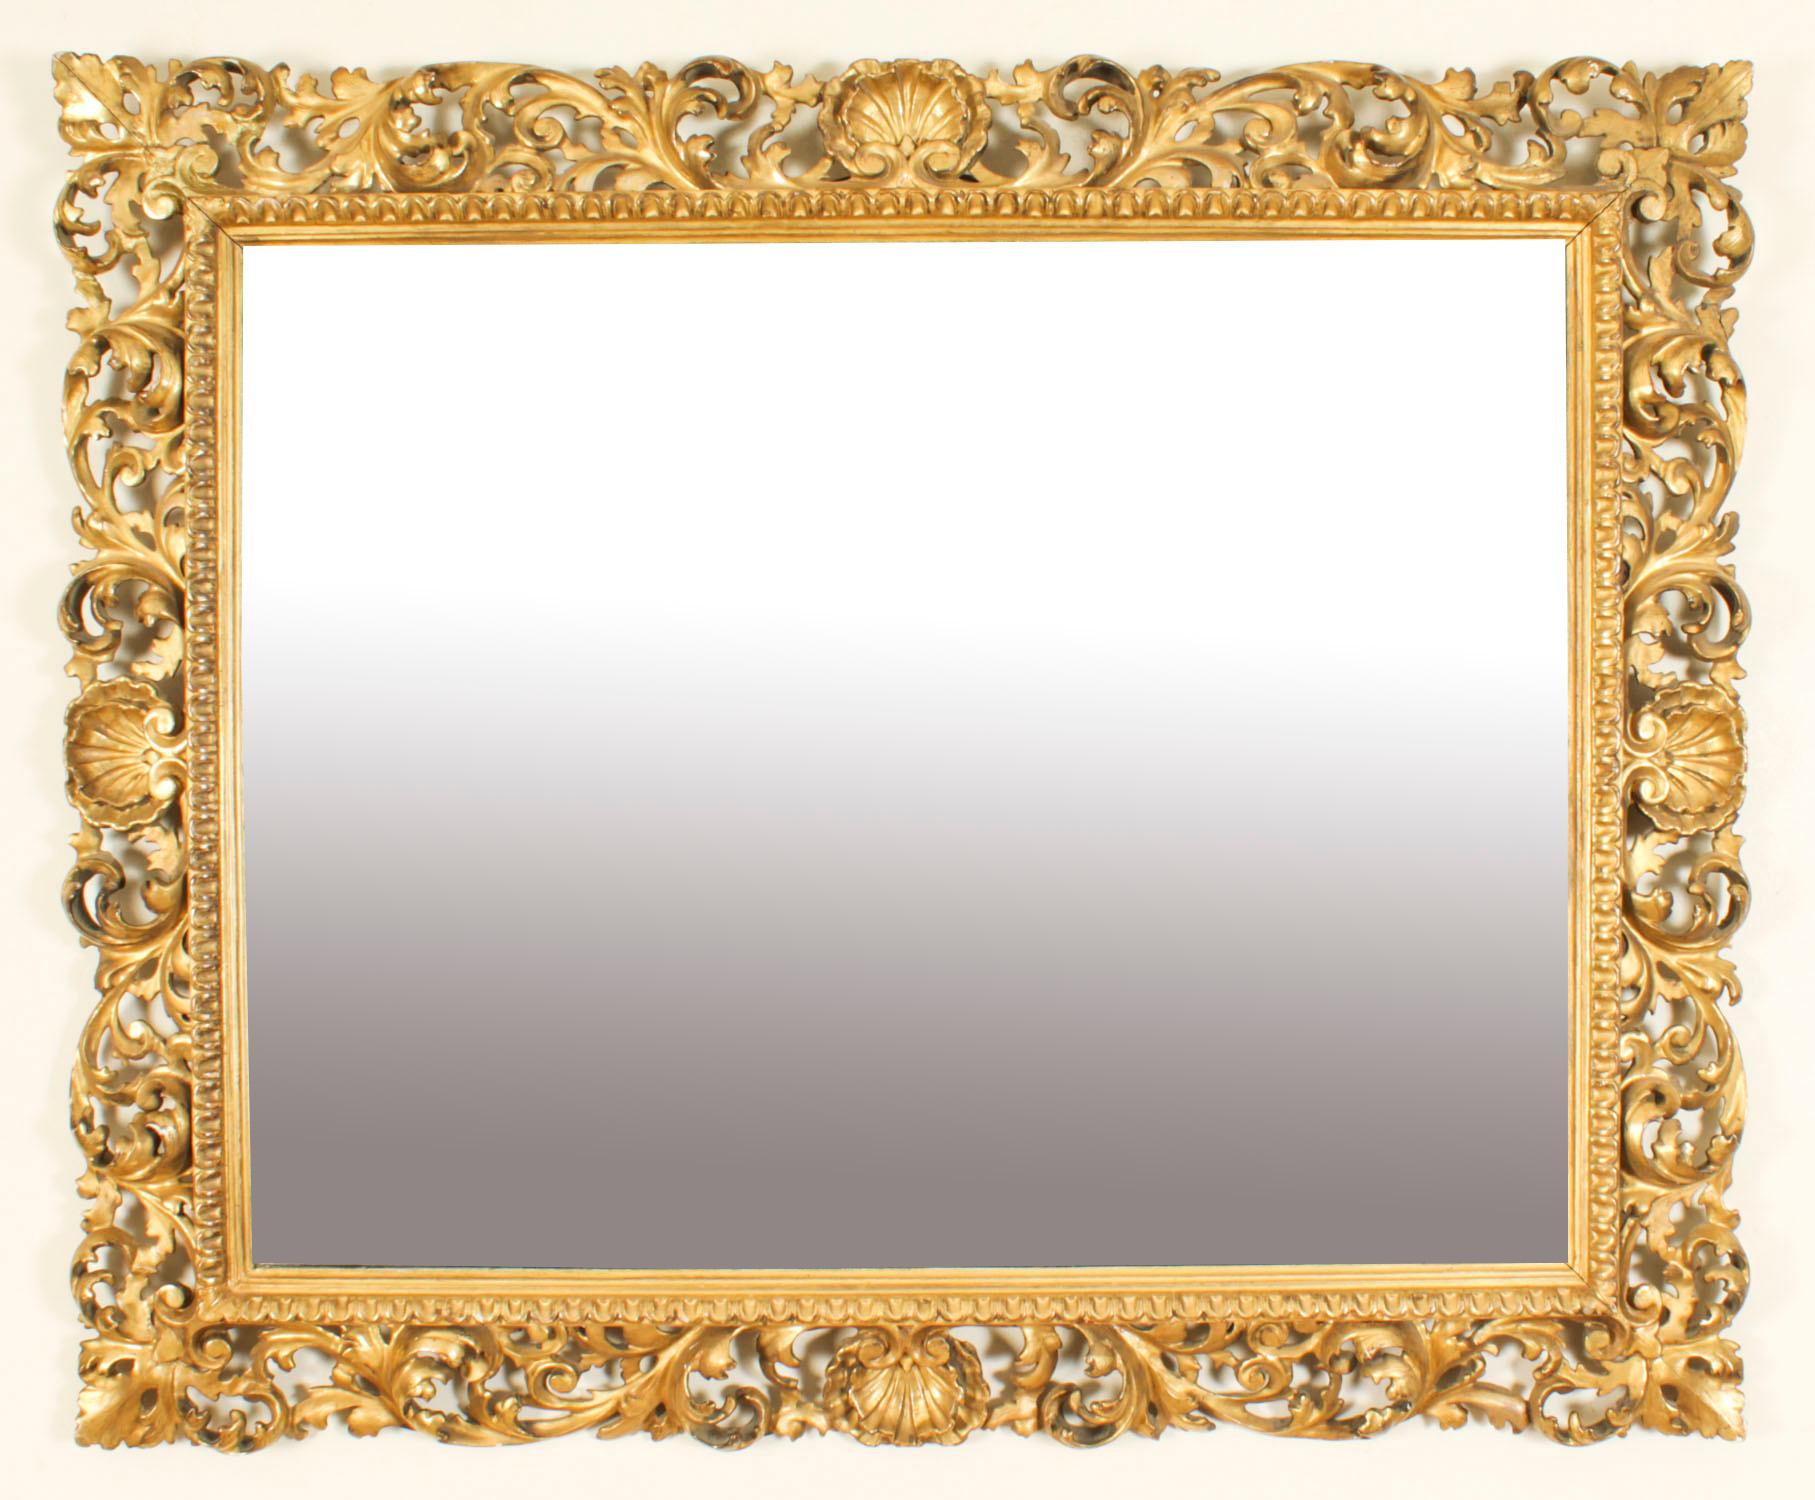 Antique Italian Giltwood Florentine Overmantle Mirror 19th Century - 86x102cm For Sale 4